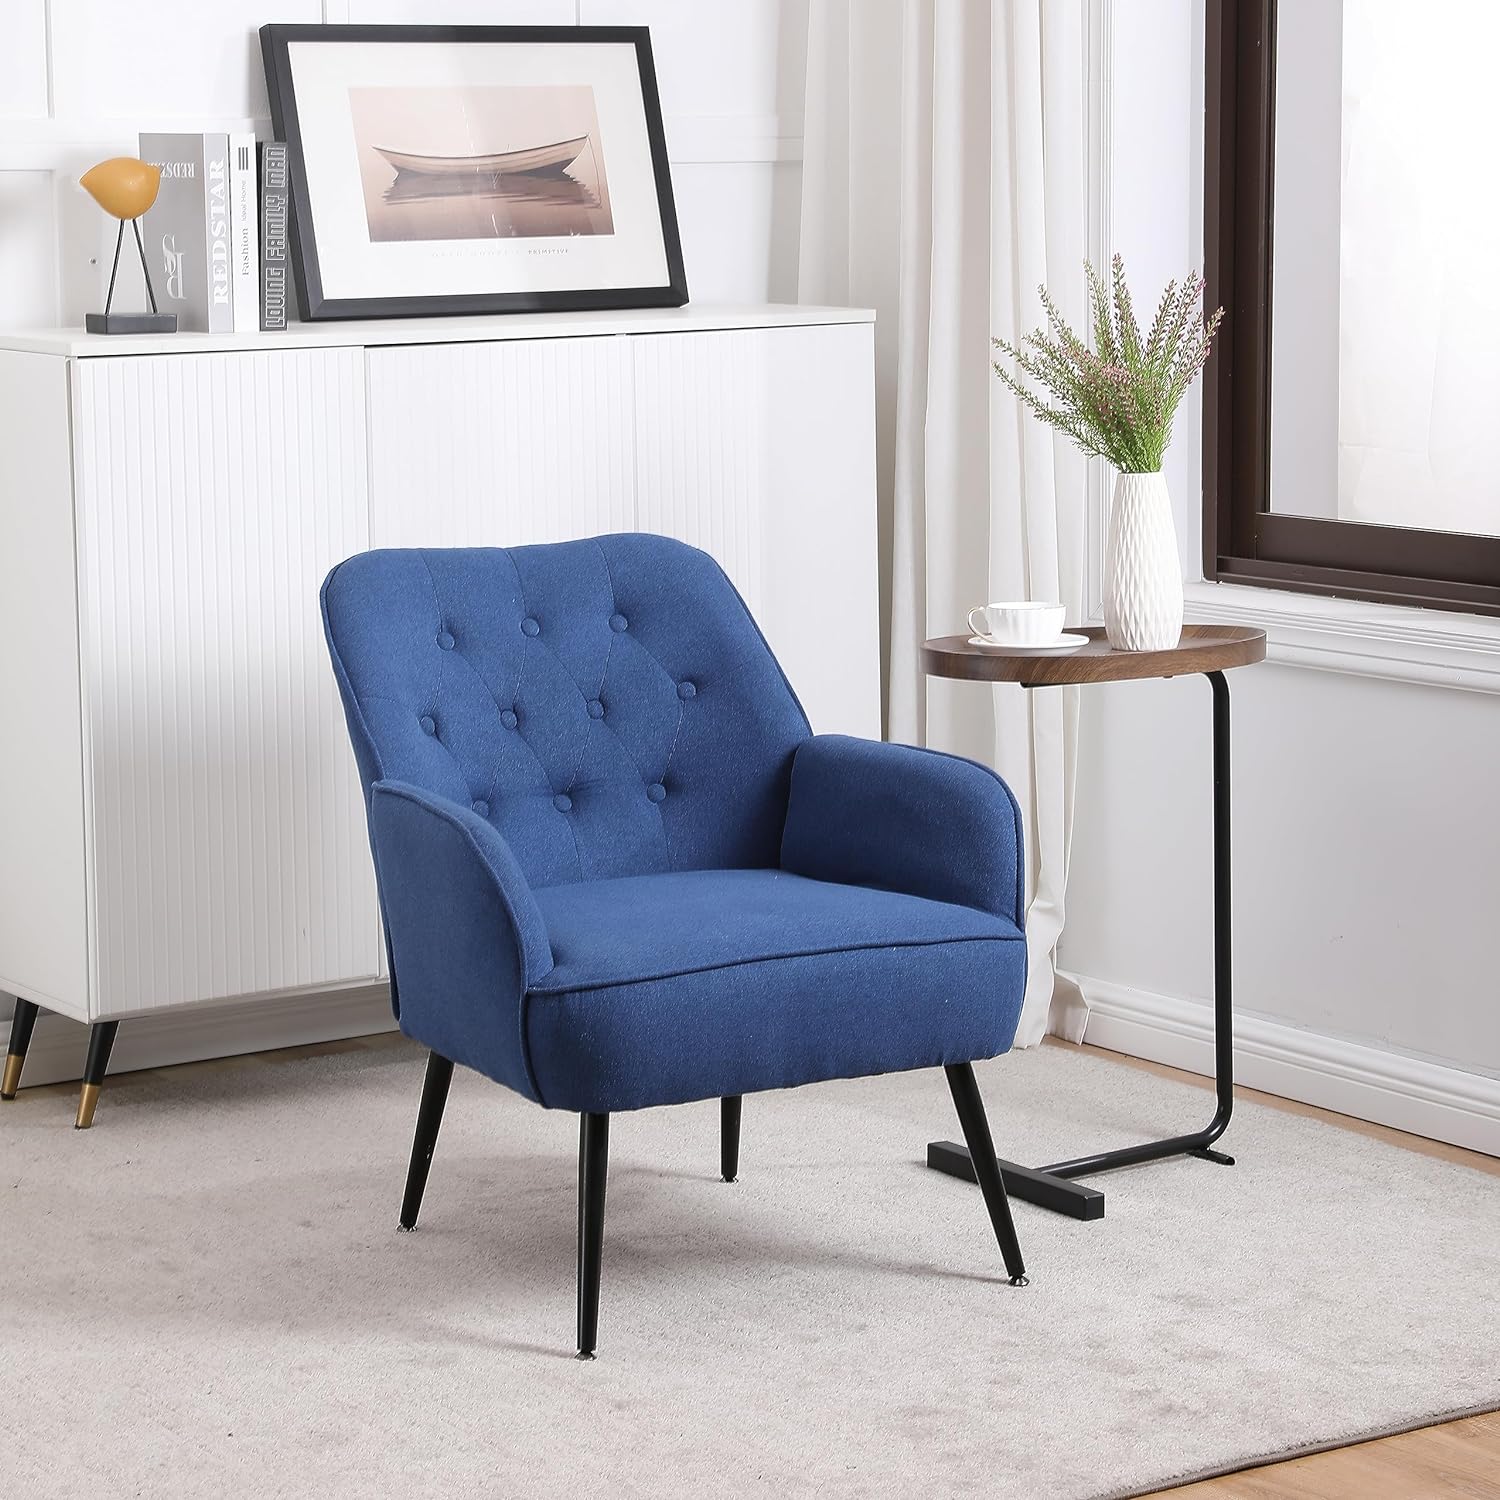 Goujxcy Modern Mid Century Blue Armchair